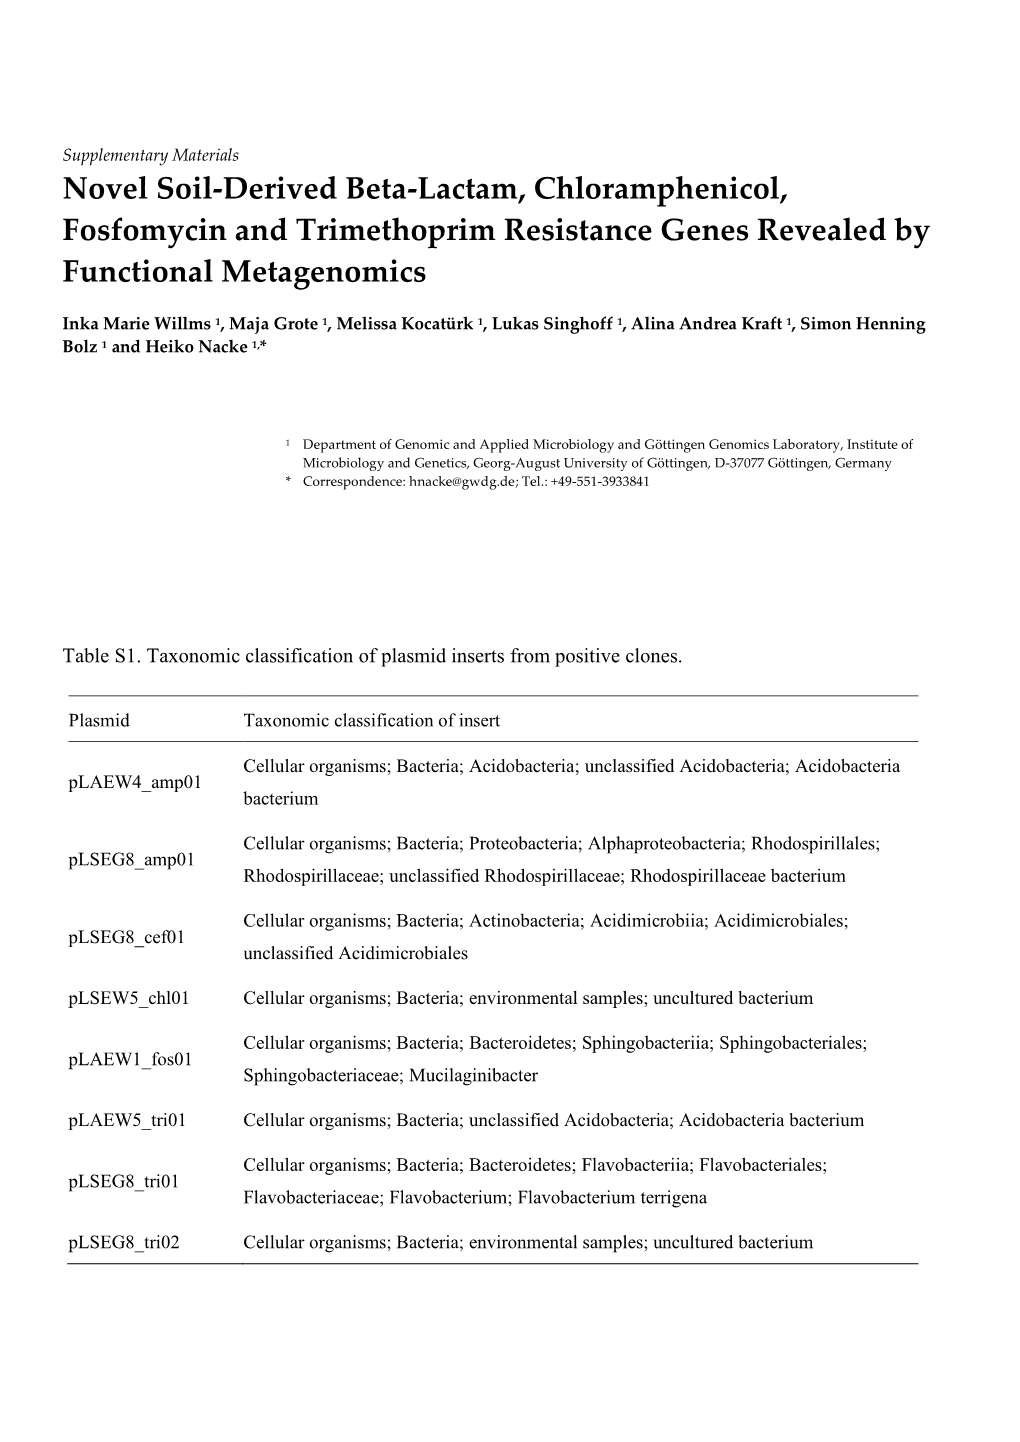 Novel Soil-Derived Beta-Lactam, Chloramphenicol, Fosfomycin and Trimethoprim Resistance Genes Revealed by Functional Metagenomics